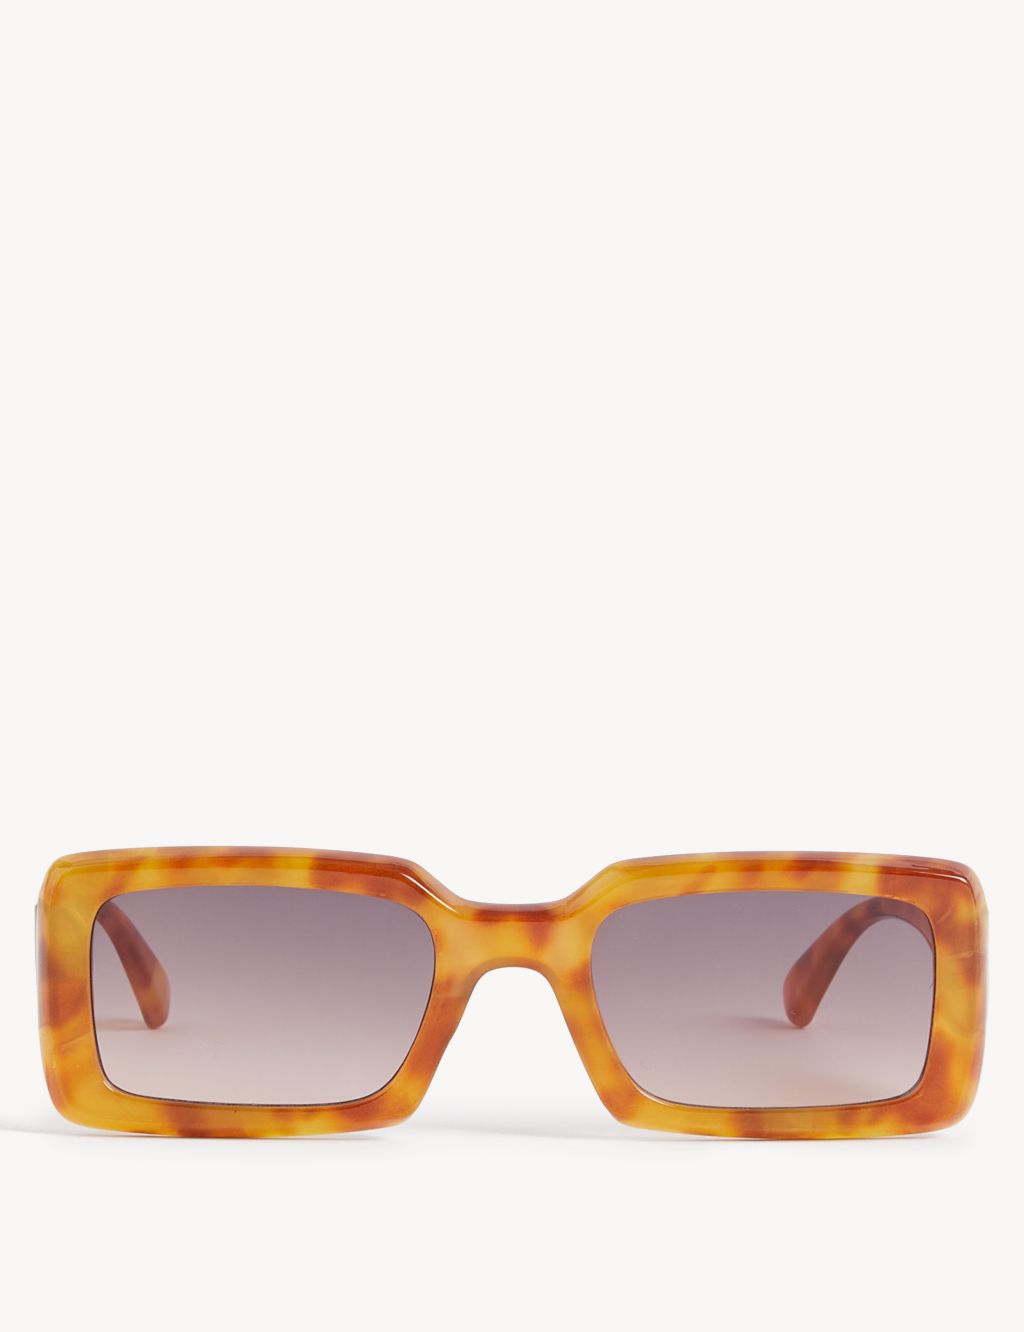 Bevelled Square Sunglasses image 1